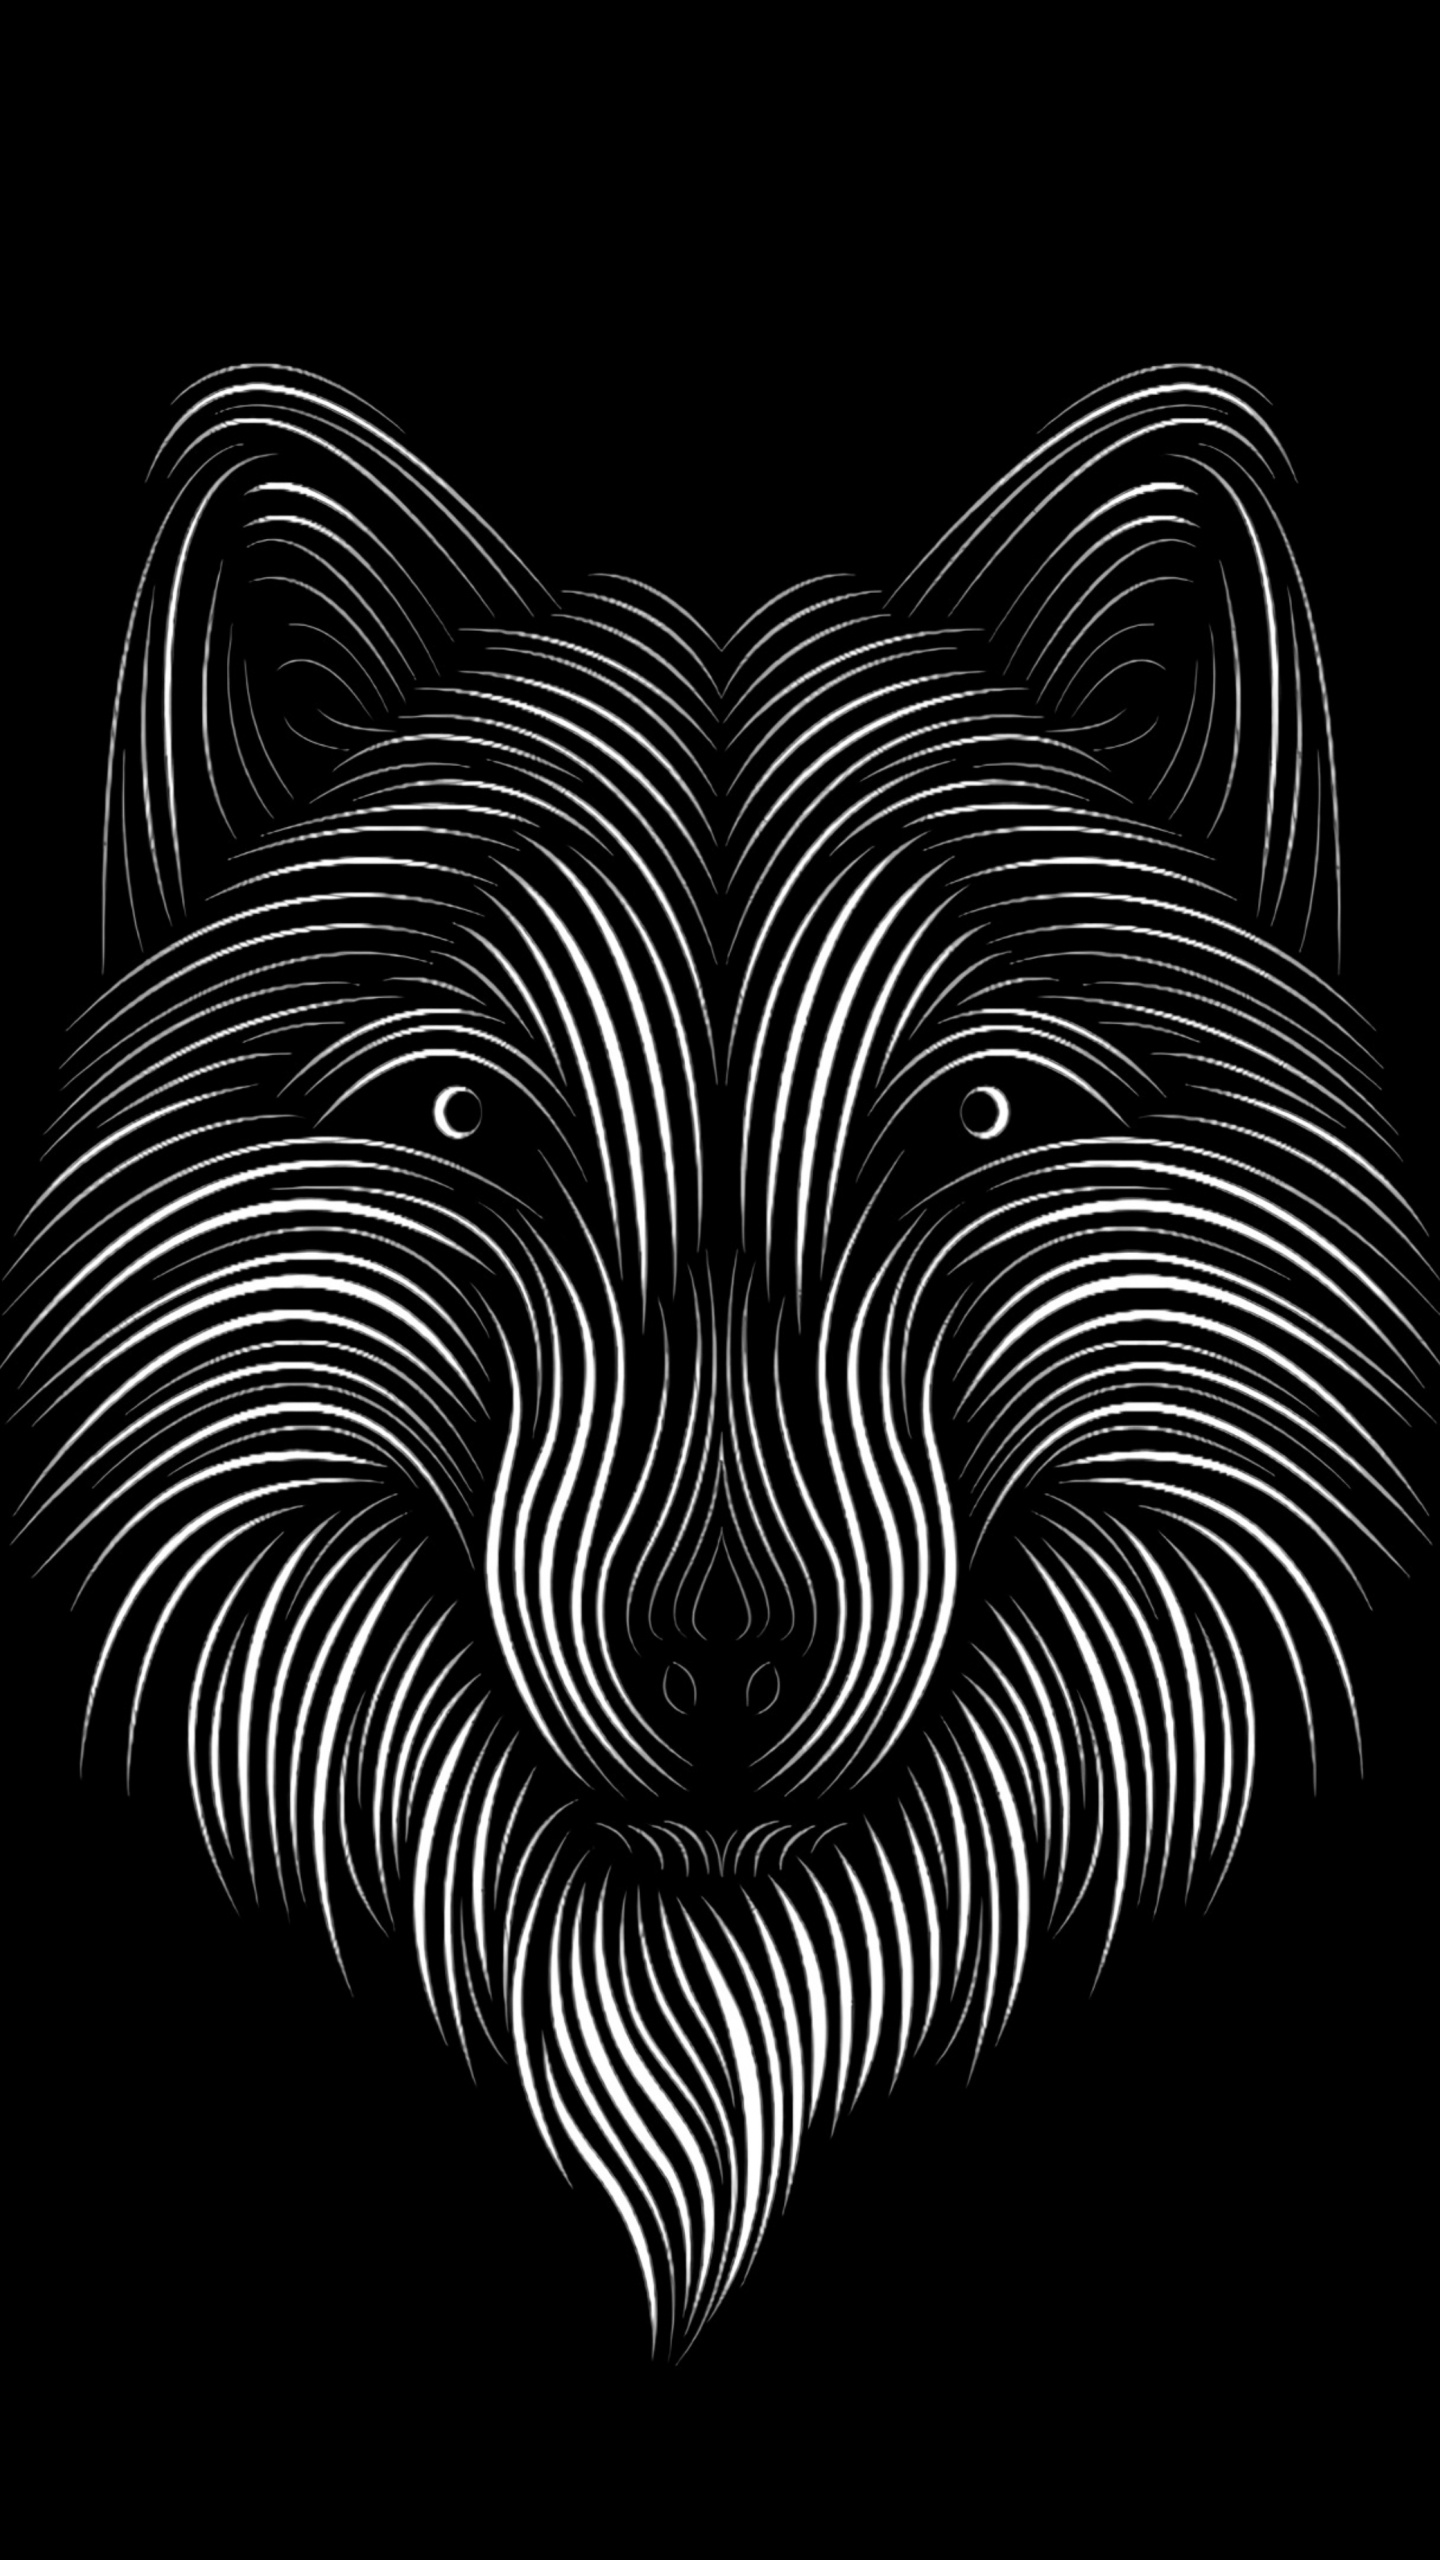 Black and White Zebra Illustration. Wallpaper in 1440x2560 Resolution